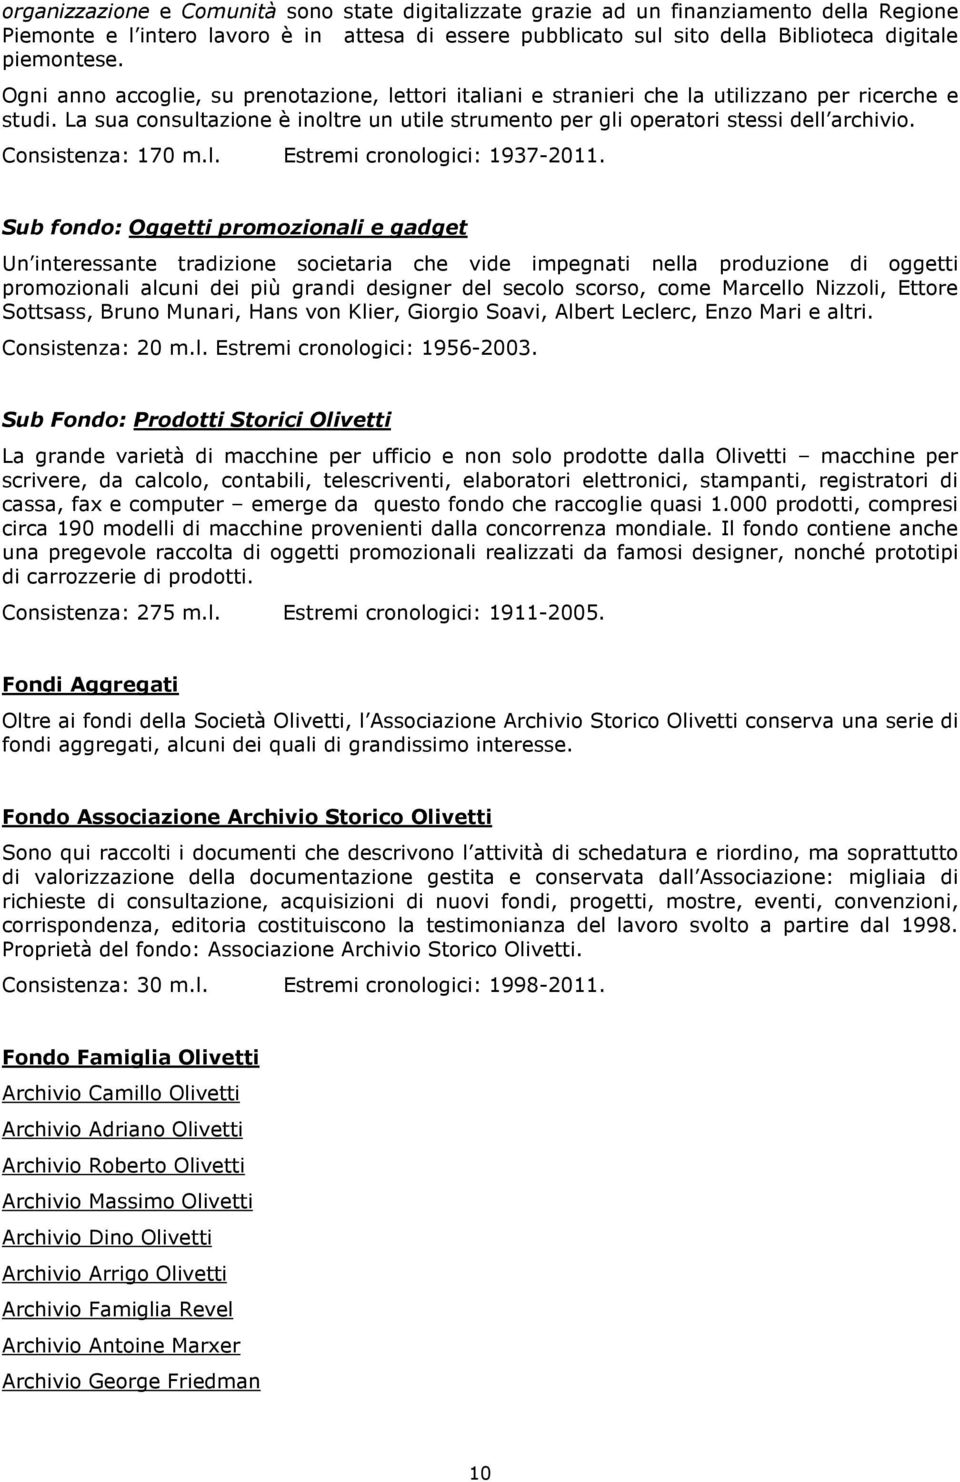 Consistenza: 170 m.l. Estremi cronologici: 1937-2011.